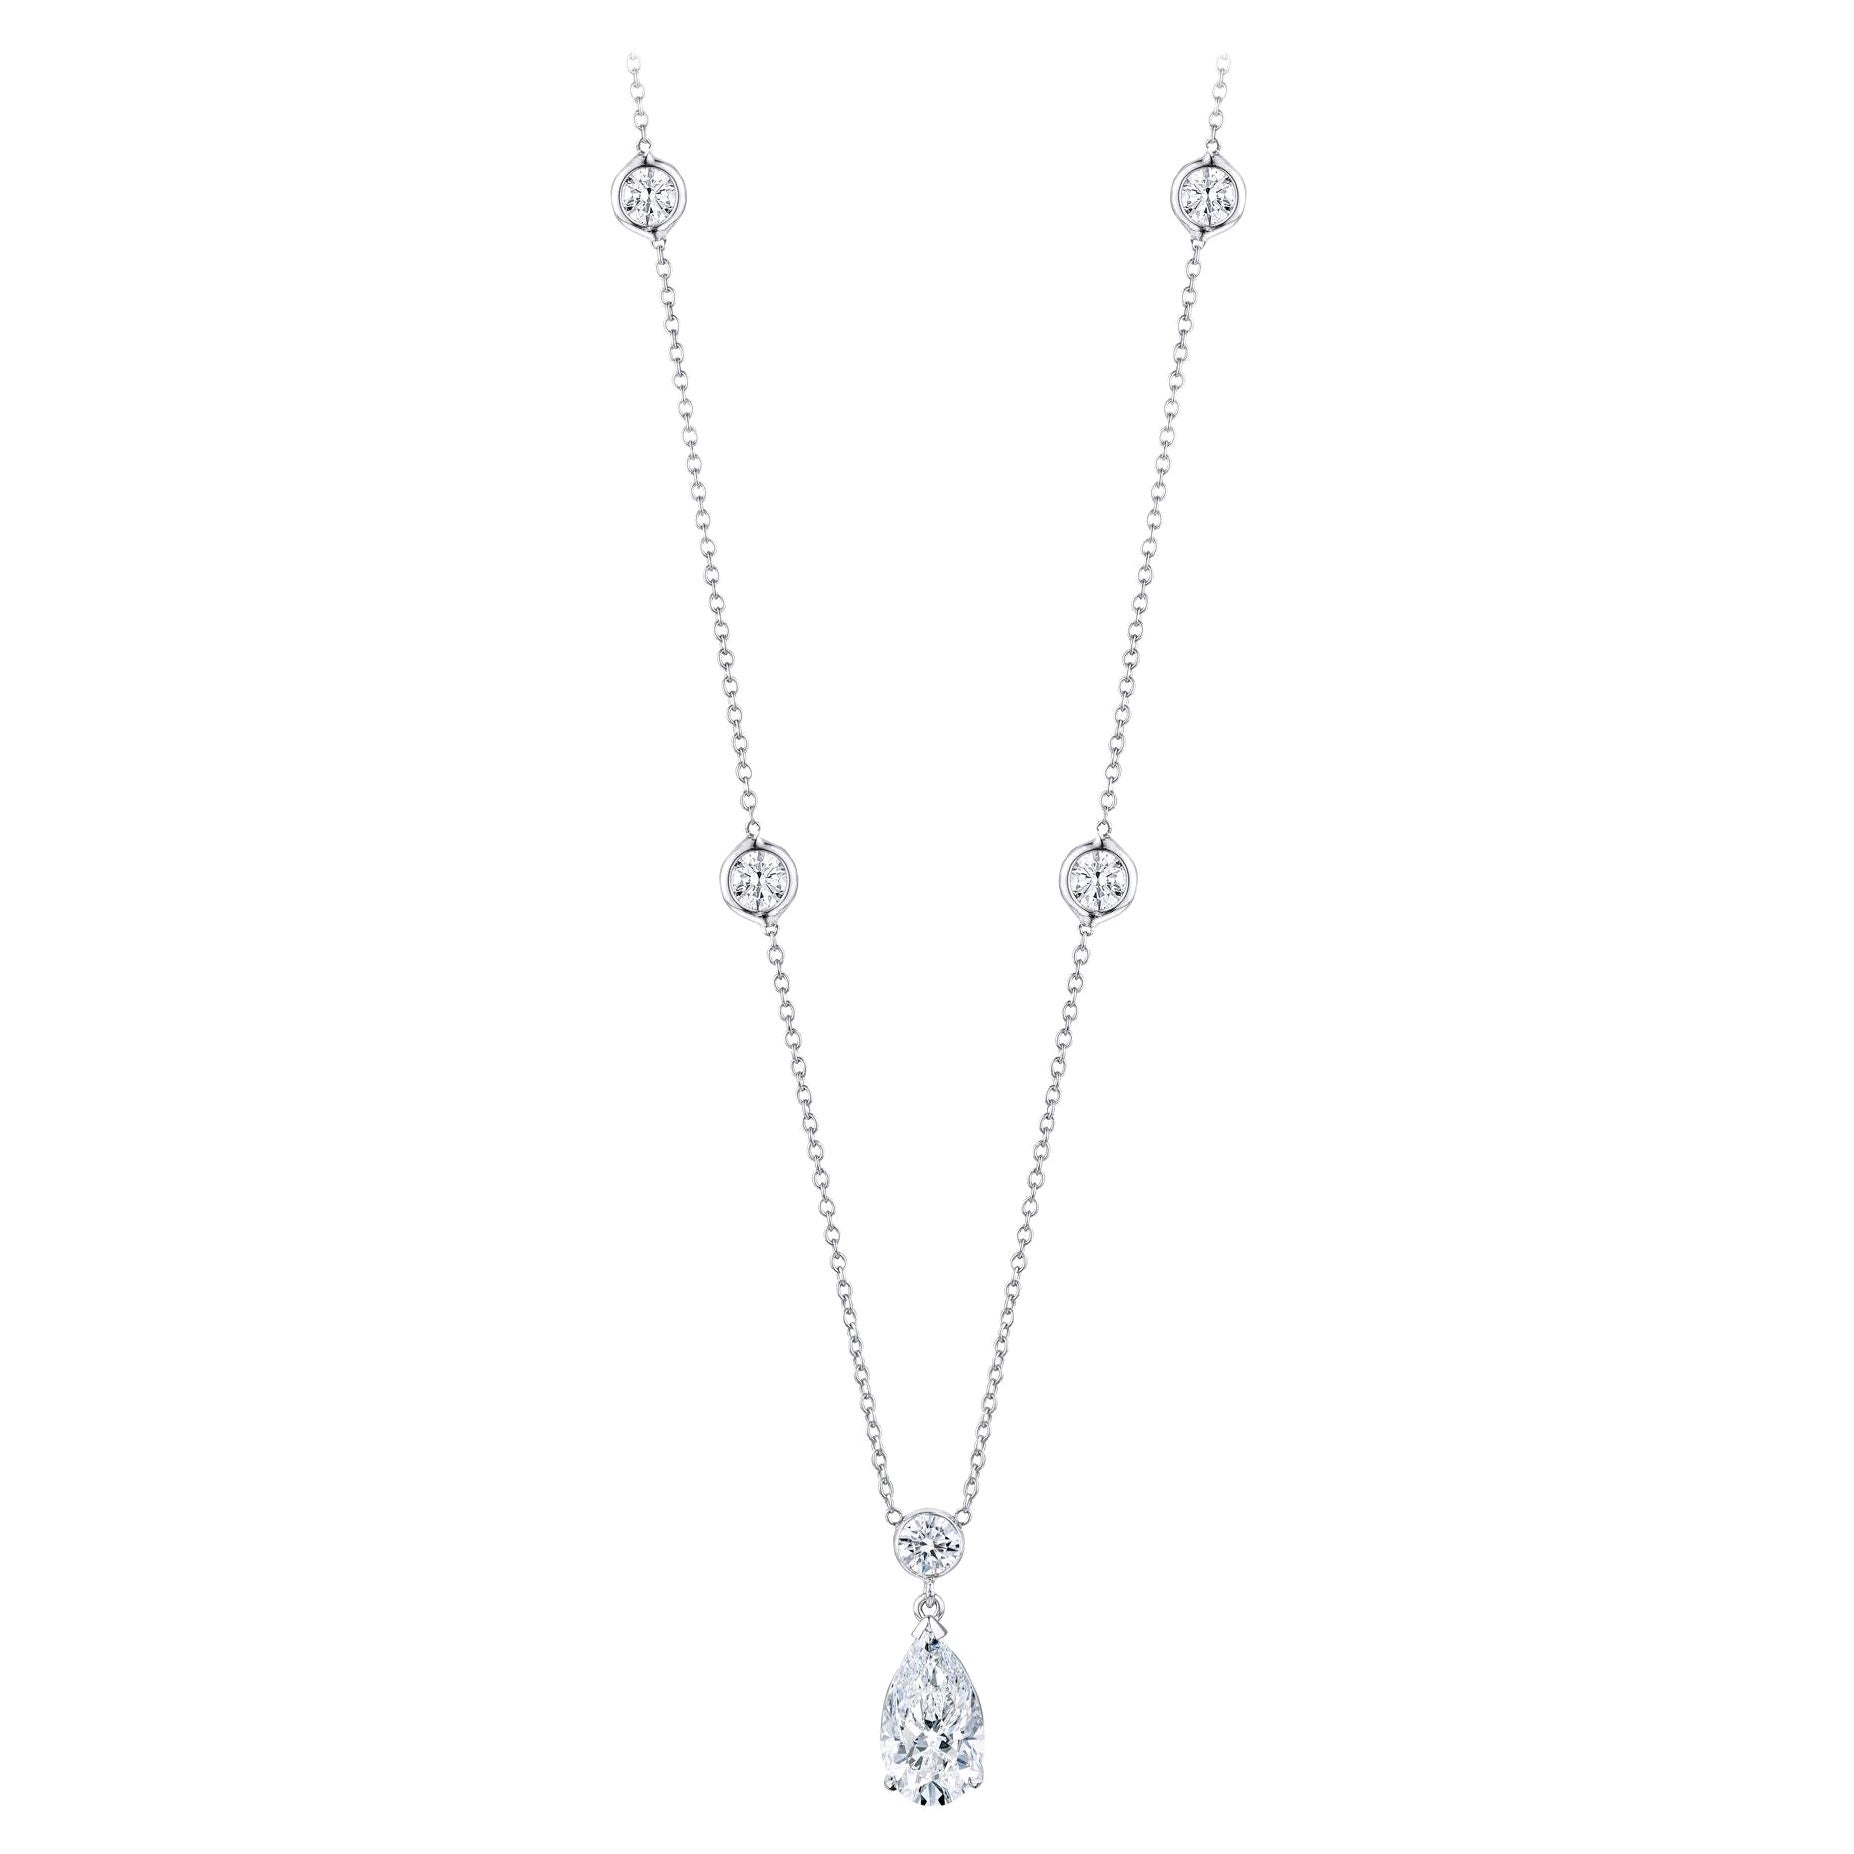 2.50 Carat Pear Shape Diamond Necklace in 18 Karat White Gold